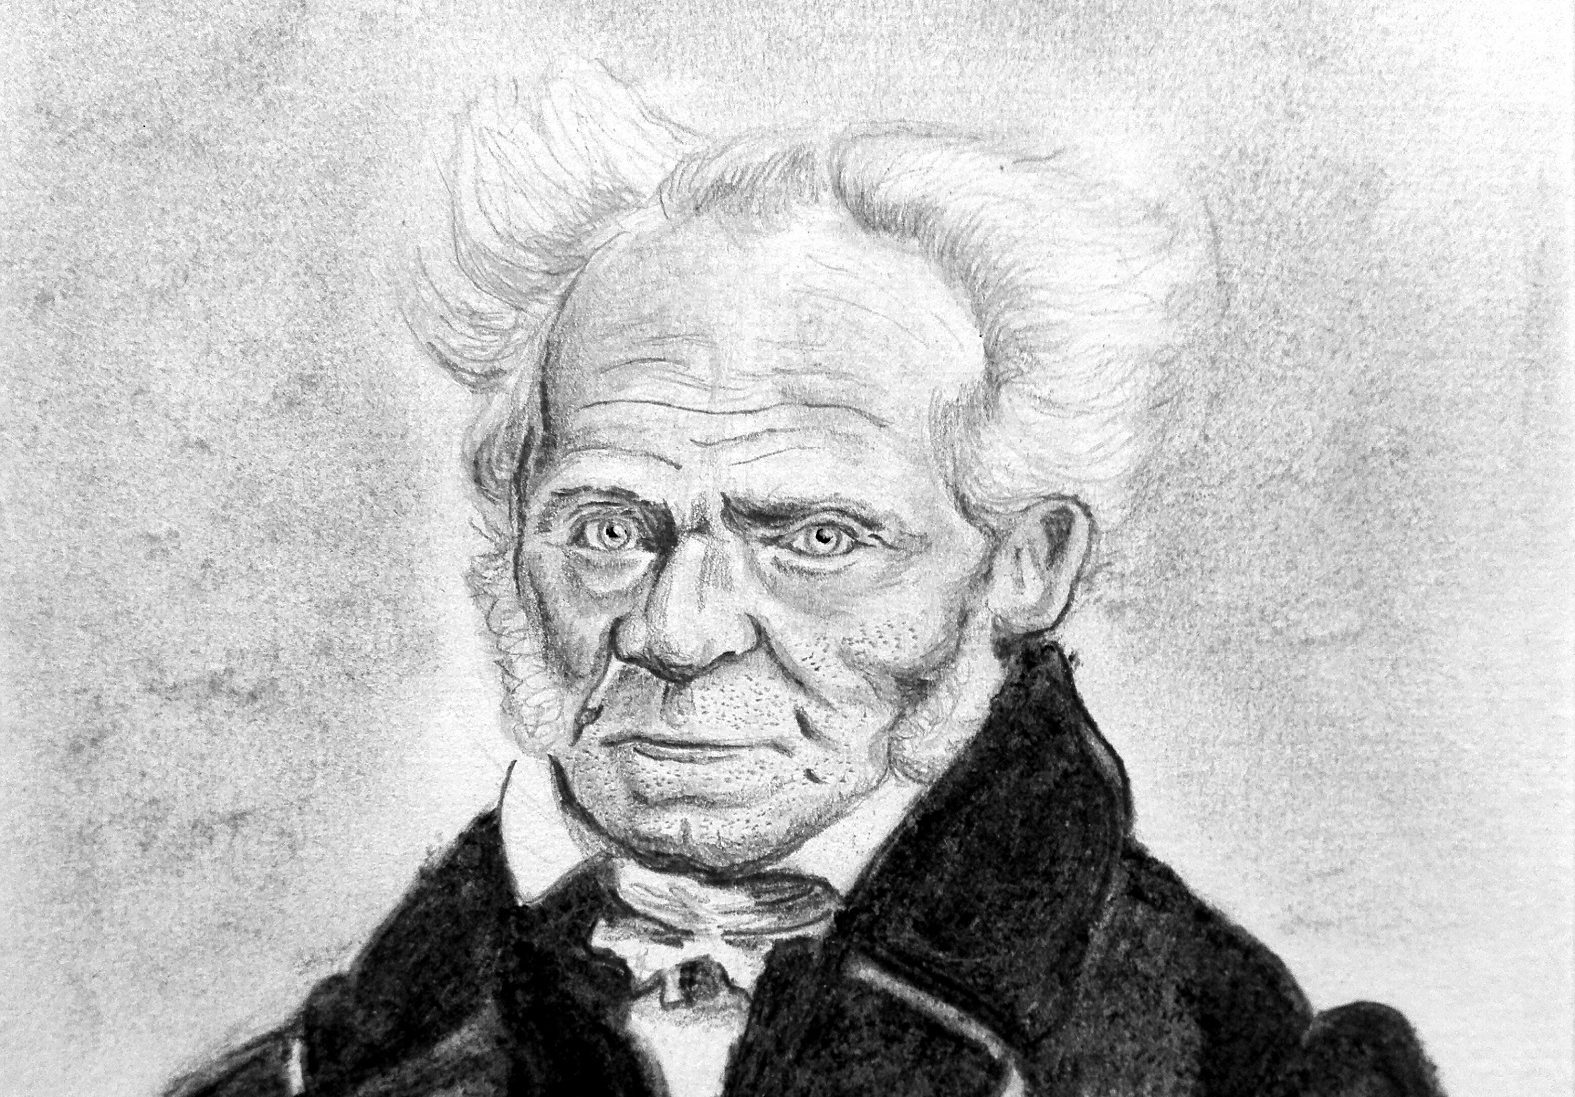 Dibujo de Arthur Schopenhauer a lápiz. -Wikipedia Commons